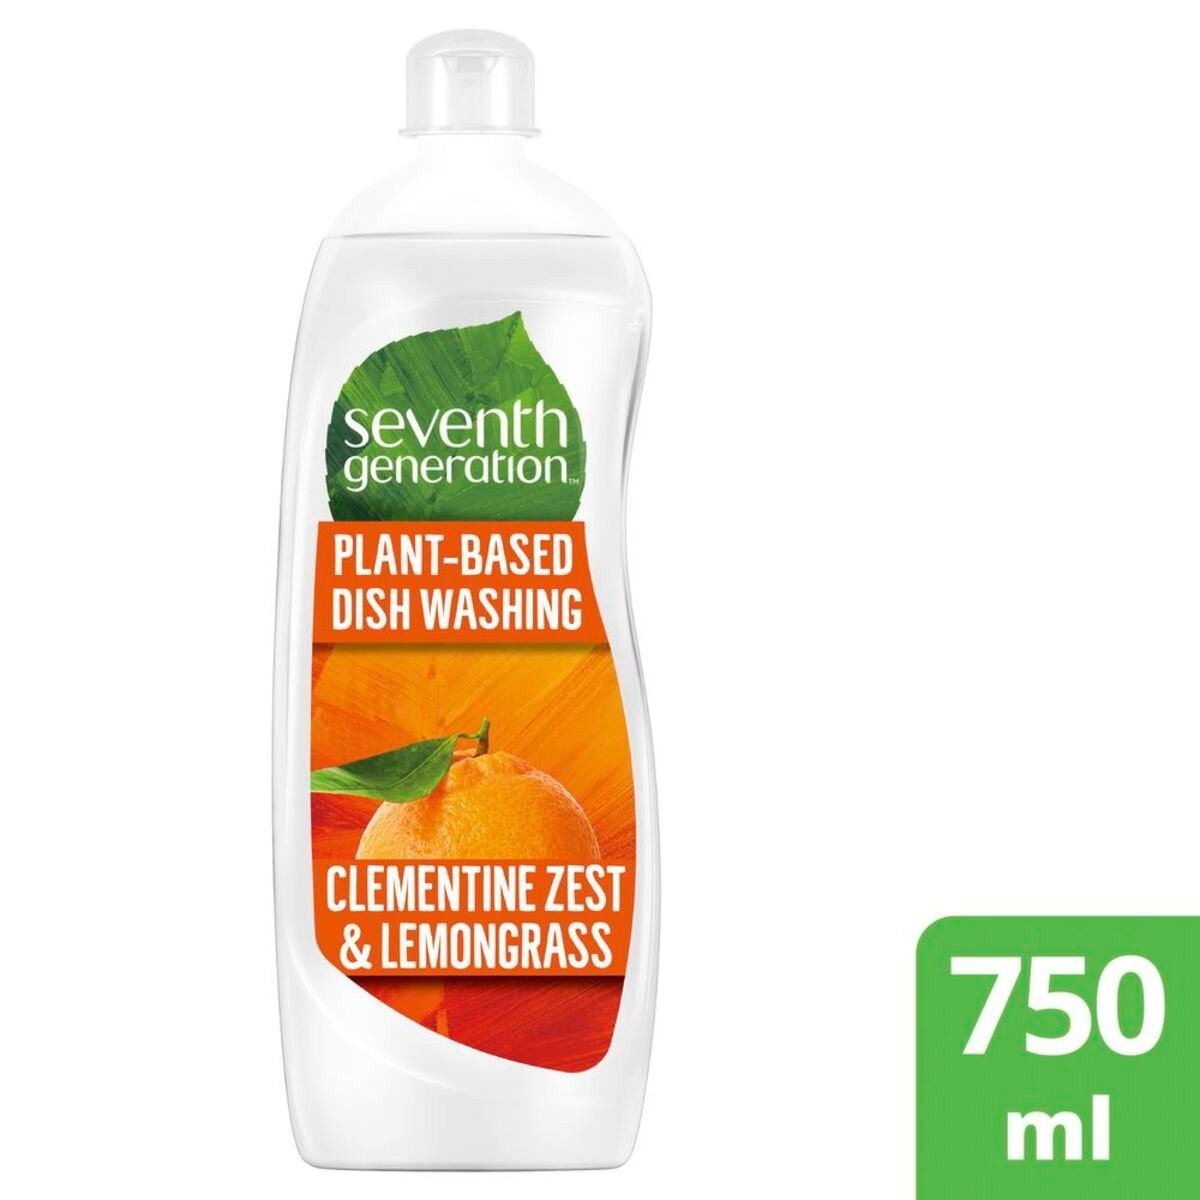 Seventh Generation Plant Based Dishwashing Clementine Zest & Lemongrass 750ml